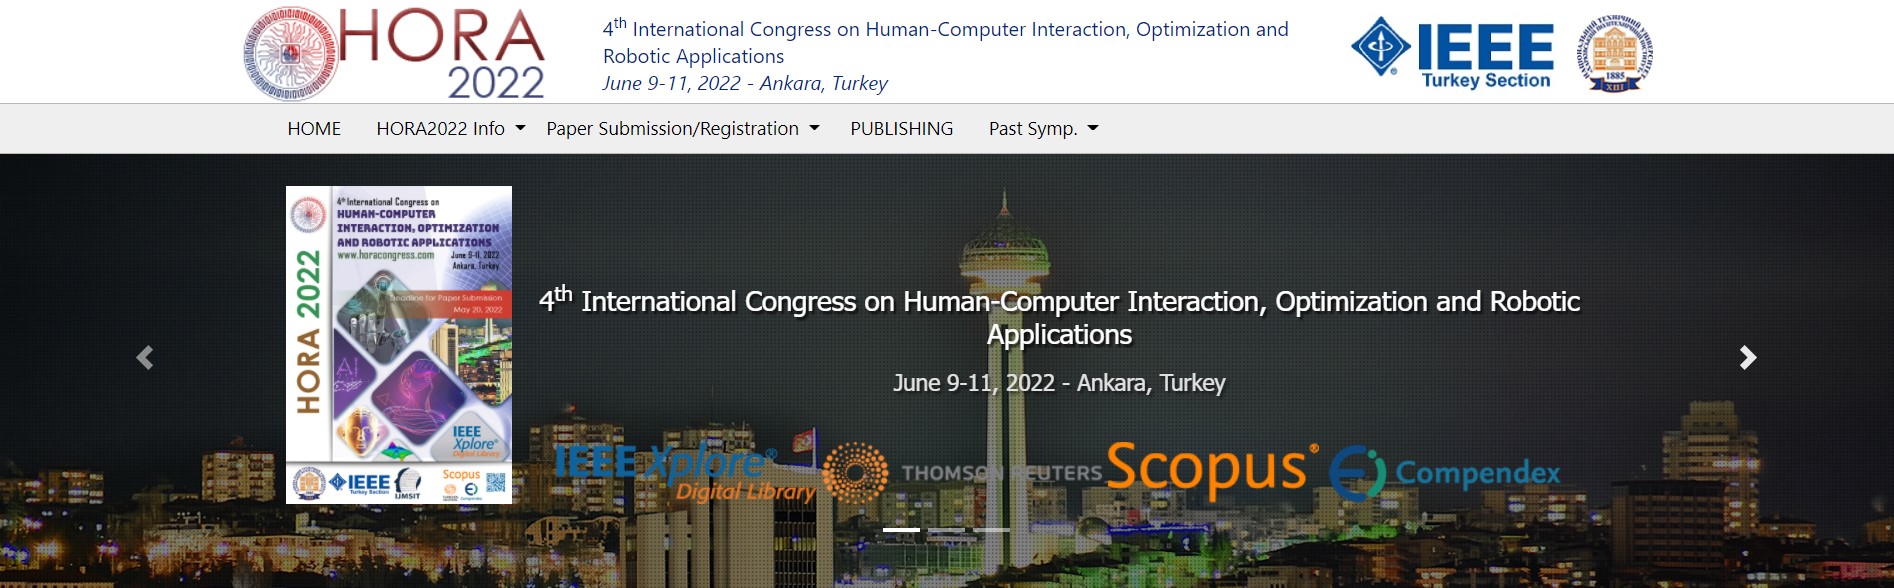 4. International Congress on Human-Computer Interaction, Optimization and Robotic Applications HORA 2022